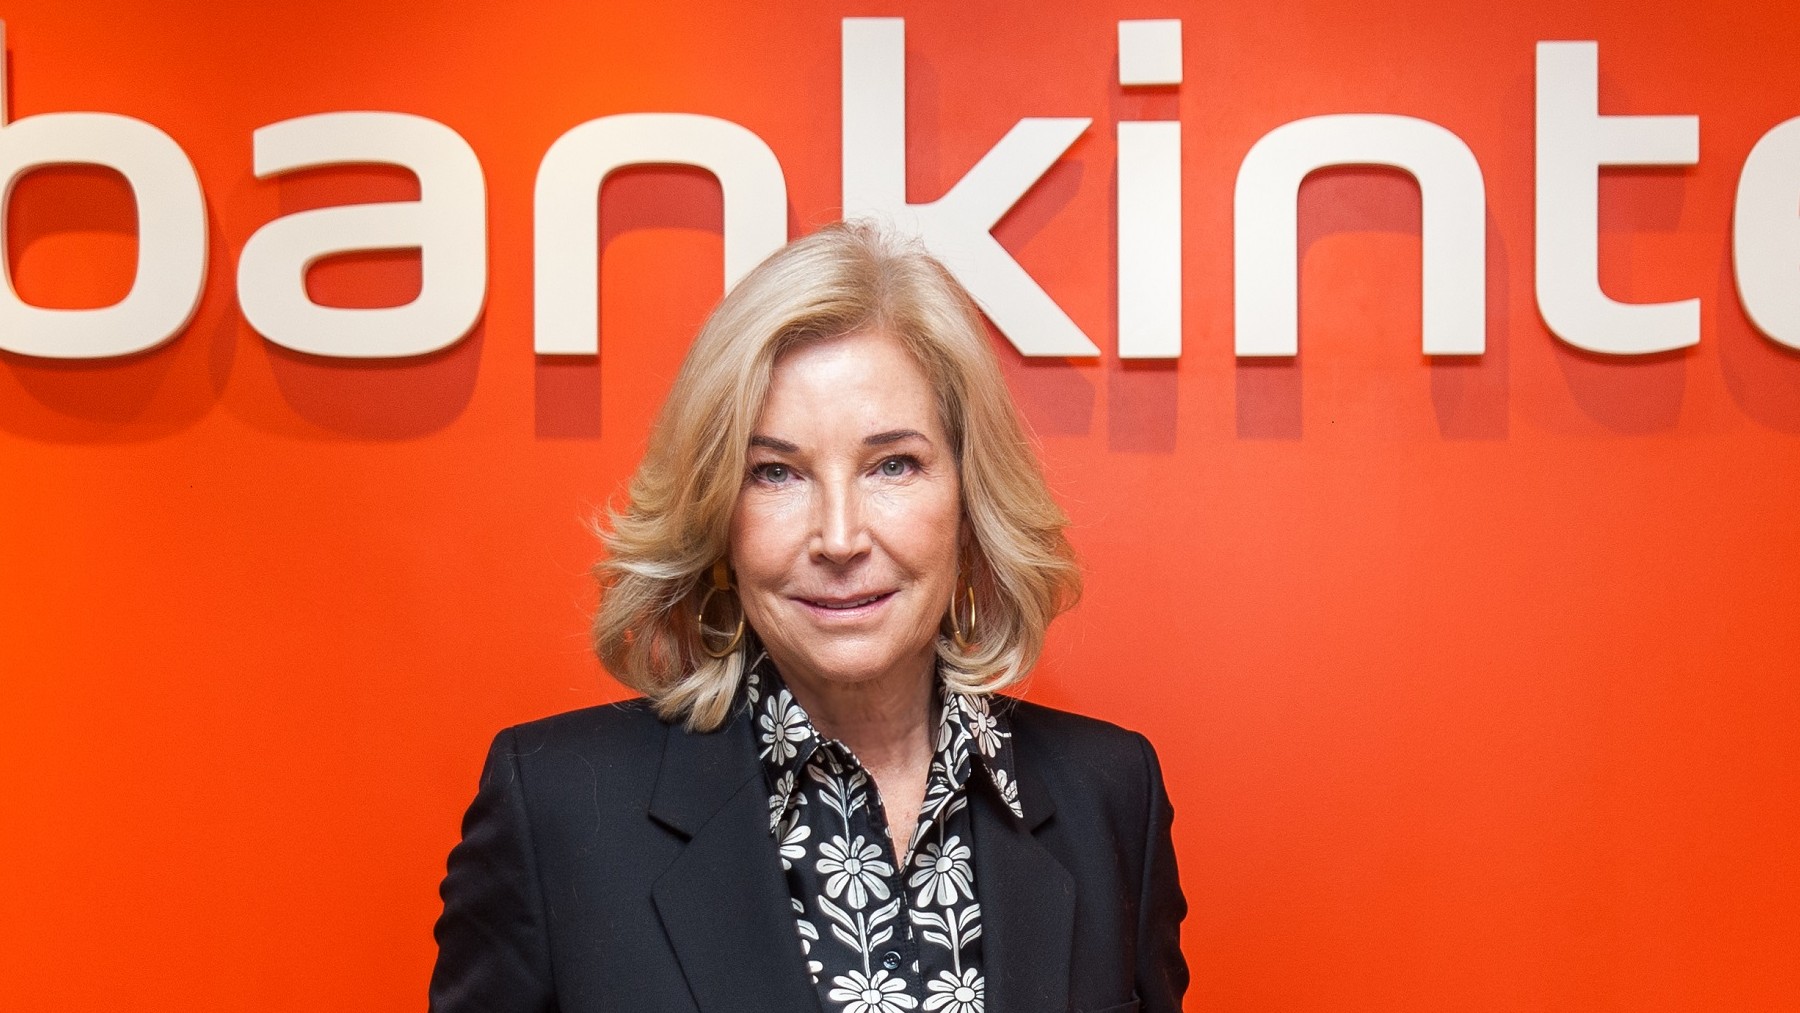 María Dolores Dancausa, CEO de Bankinter